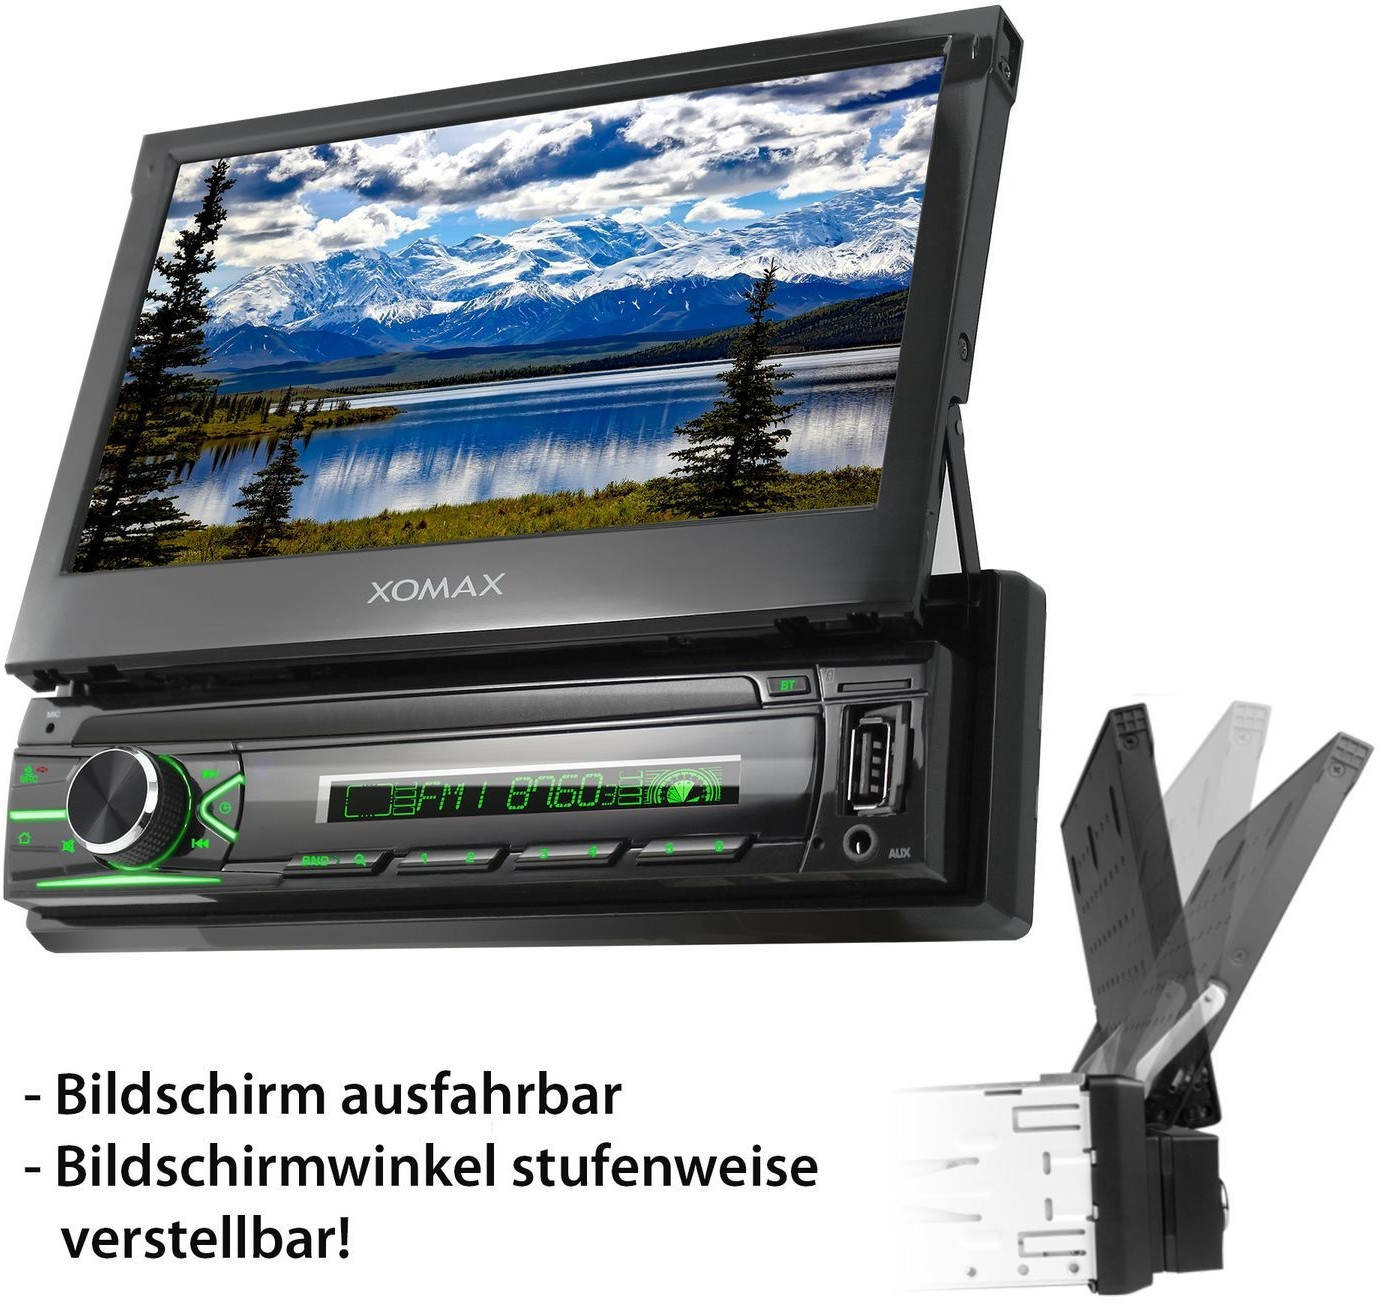 XOMAX XM-V747 Autoradio mit 7 Zoll Bildschirm, Bluetooth, USB, SD